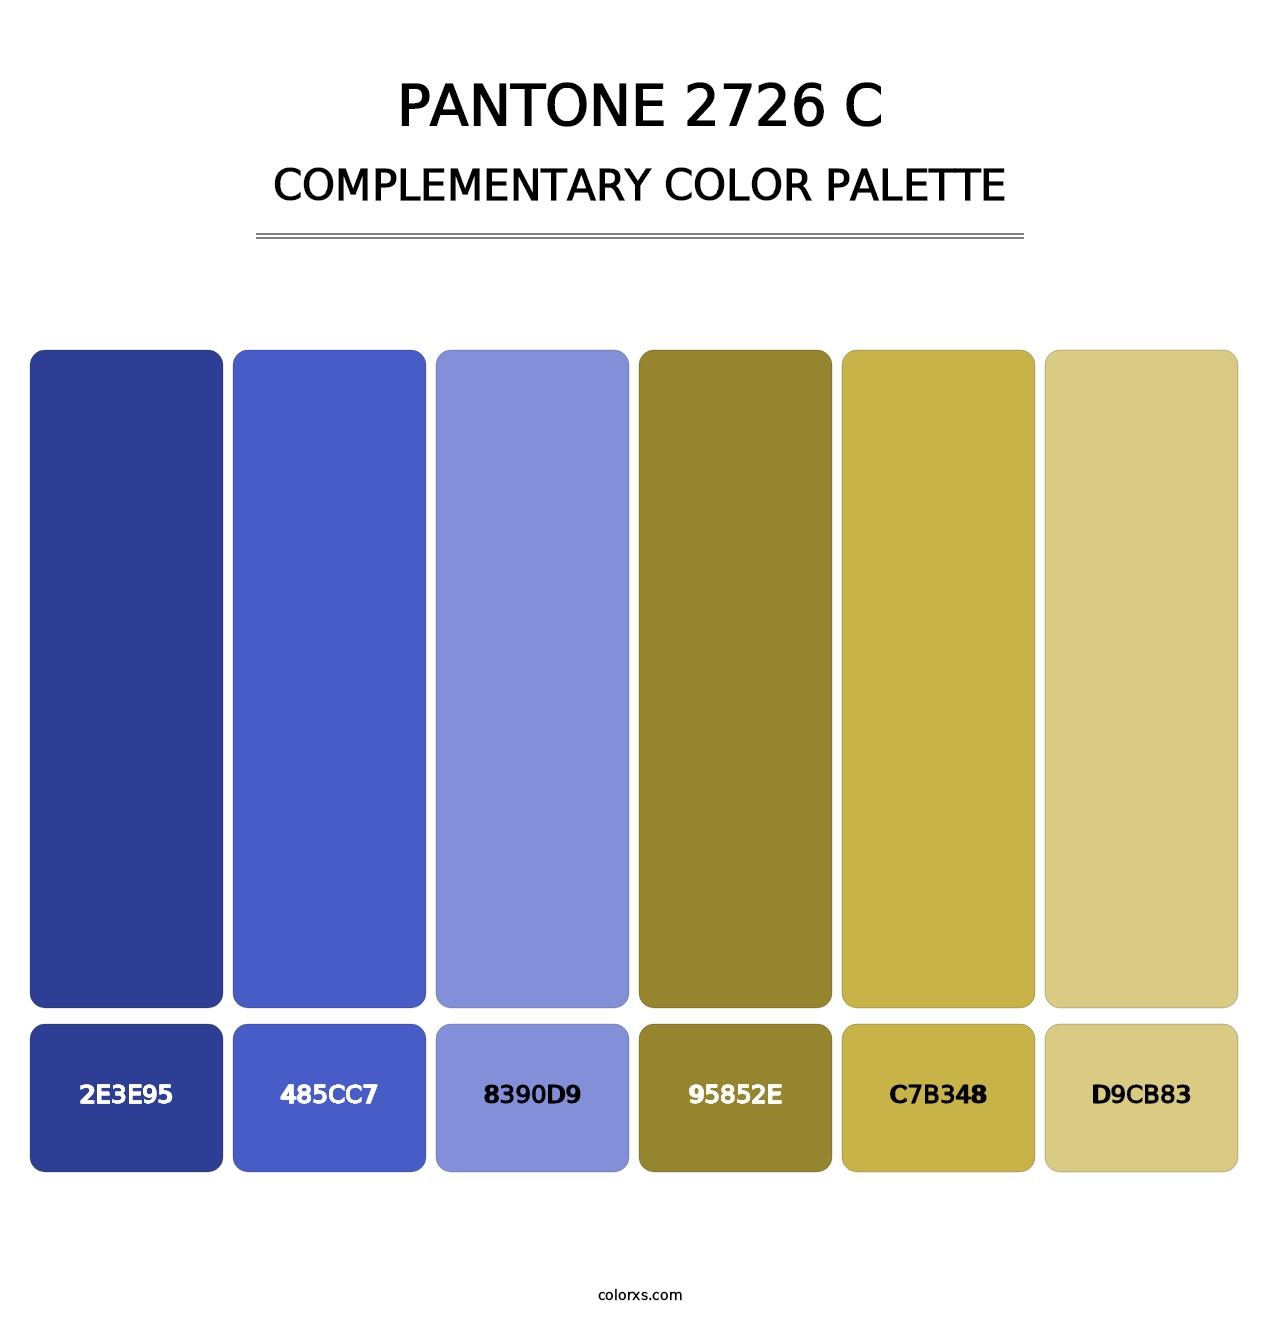 PANTONE 2726 C - Complementary Color Palette